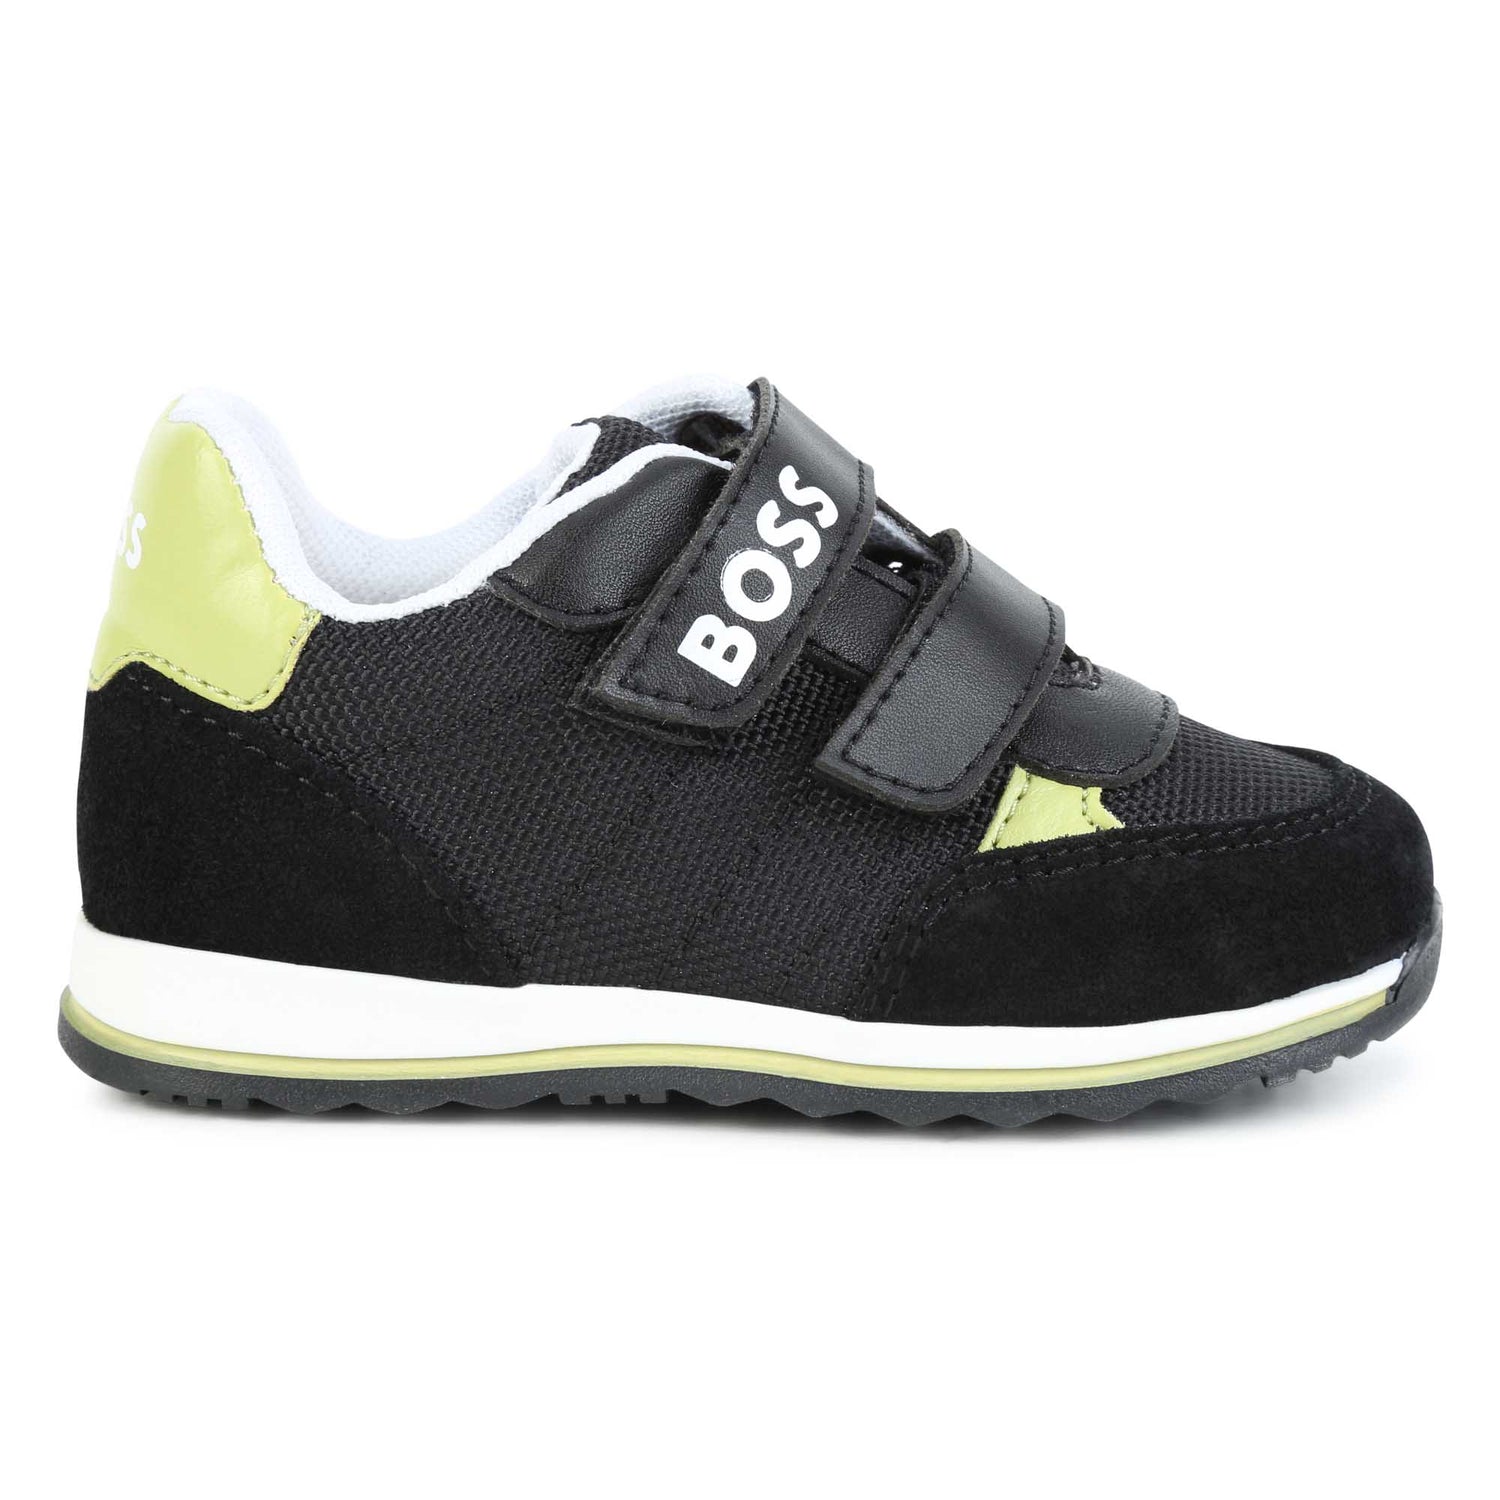 Bulton Running leather sneakers - BOSS - Pellecchia Store